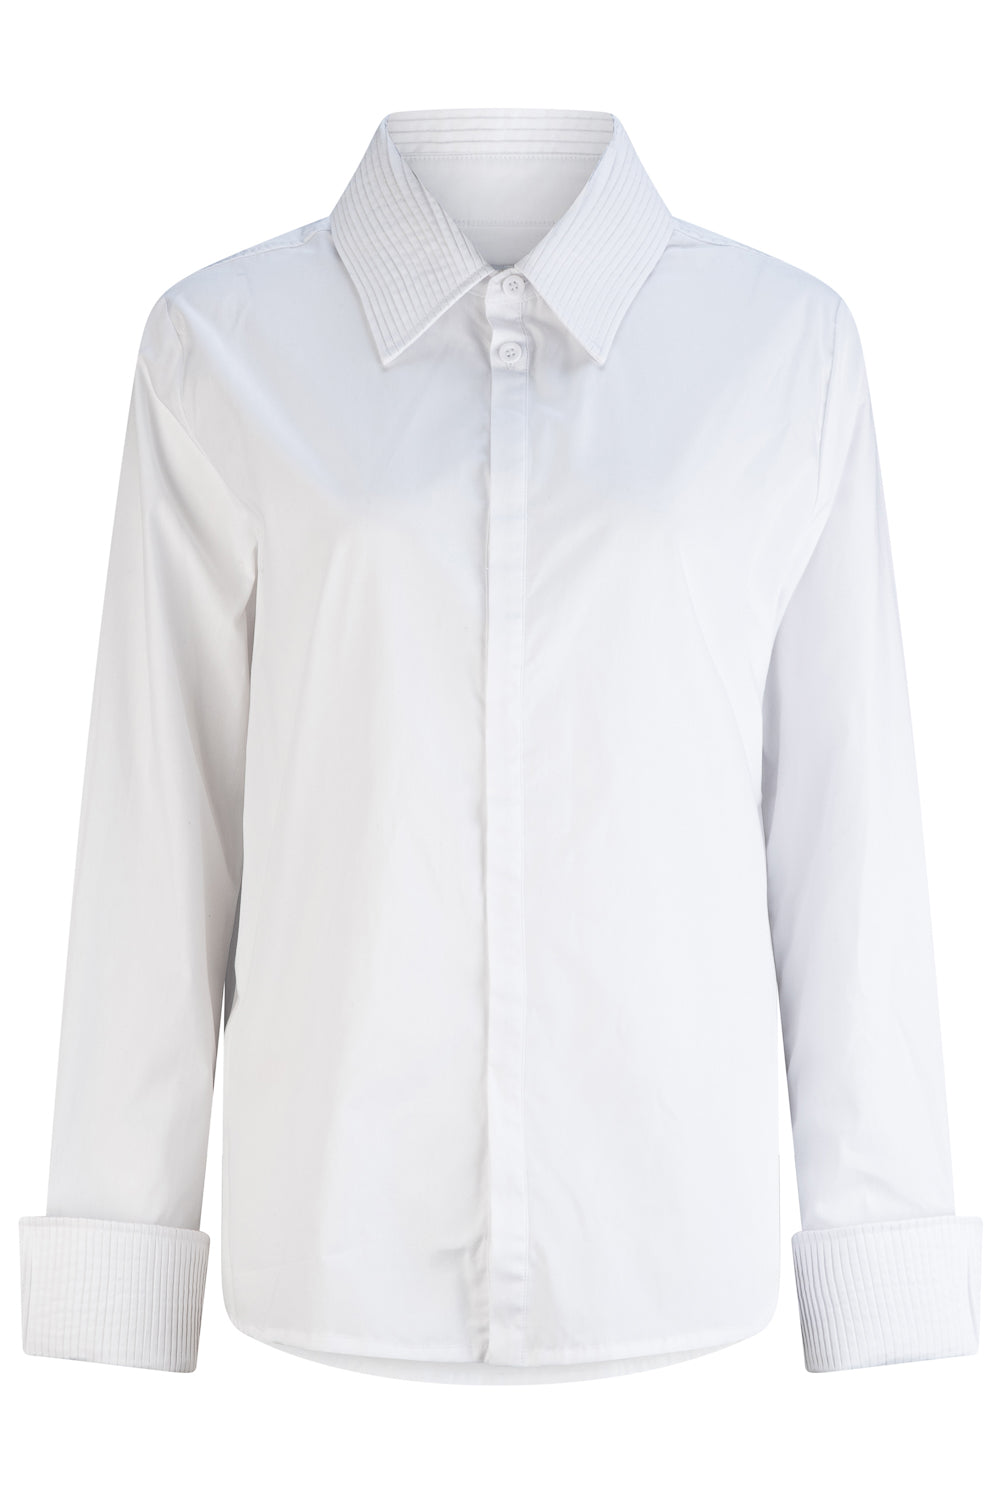 Dref By D Women's Ontario Cotton Shirt - White